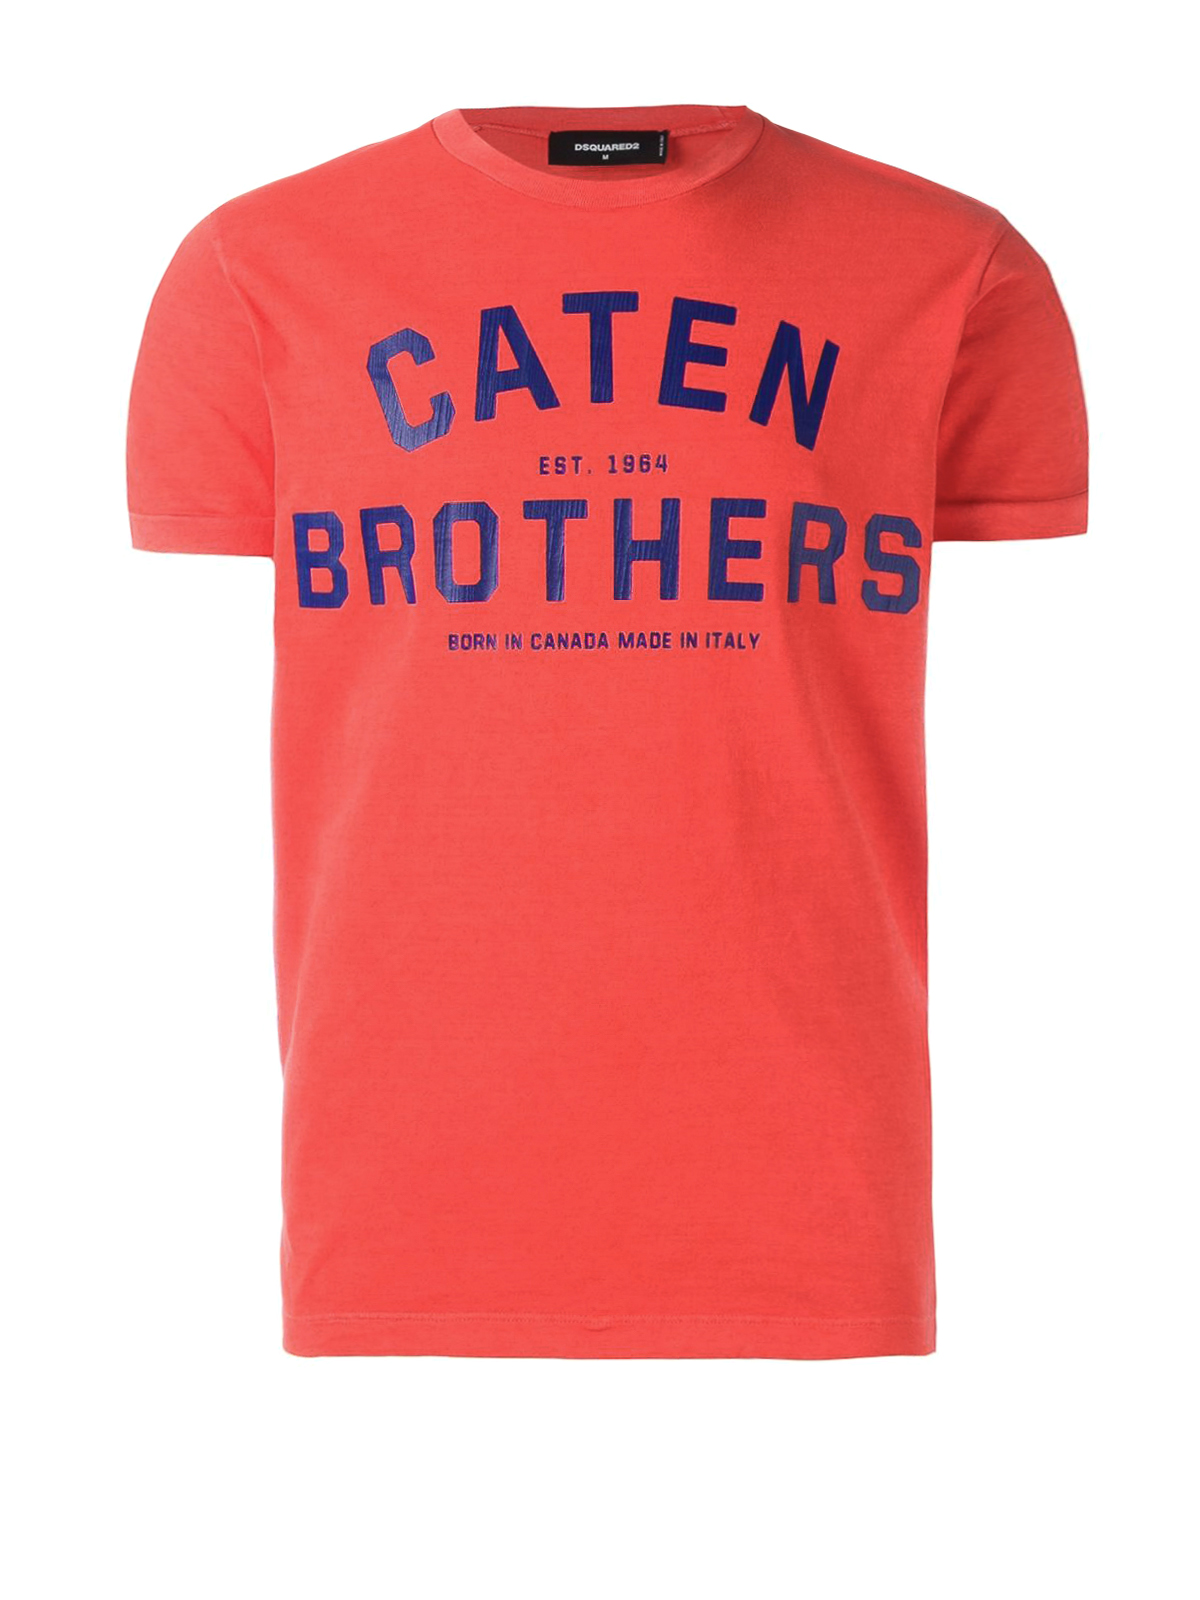 Gespierd enthousiasme erotisch T-shirts Dsquared2 - Caten Brothers cotton Tee - S74GD0200S20694304